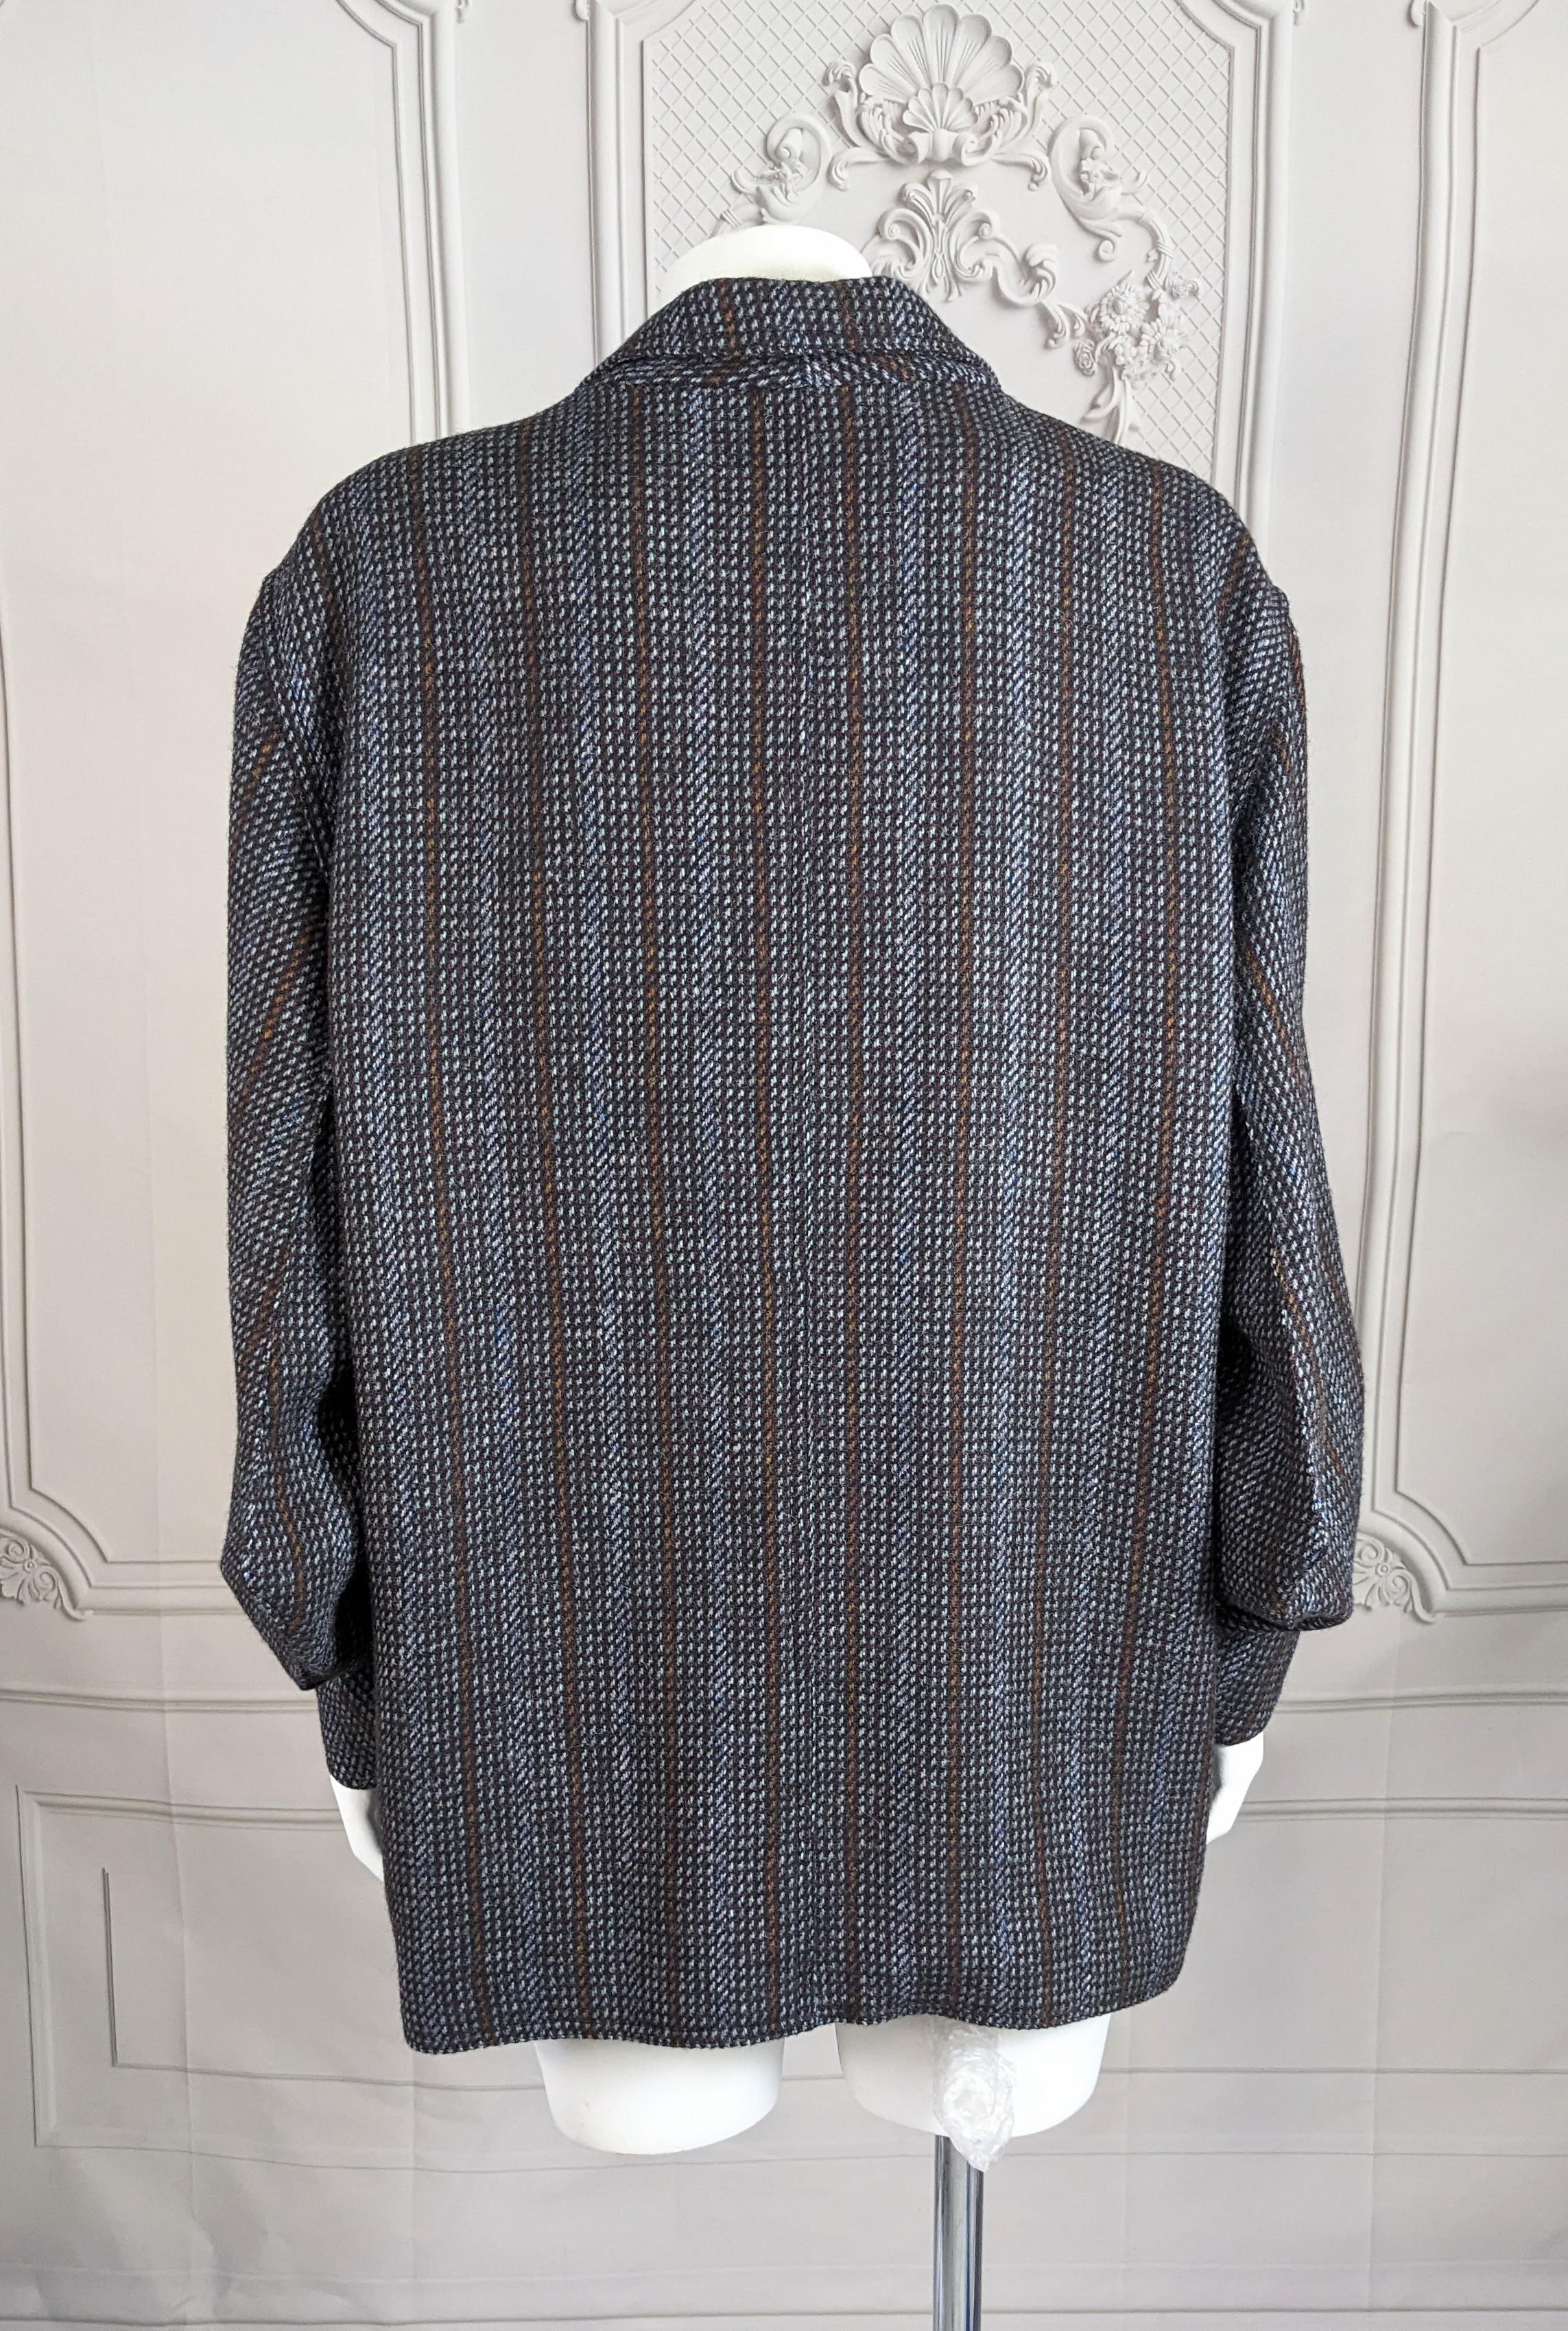 Anne Marie Beretta Sculpted Tweed Jacket  For Sale 4